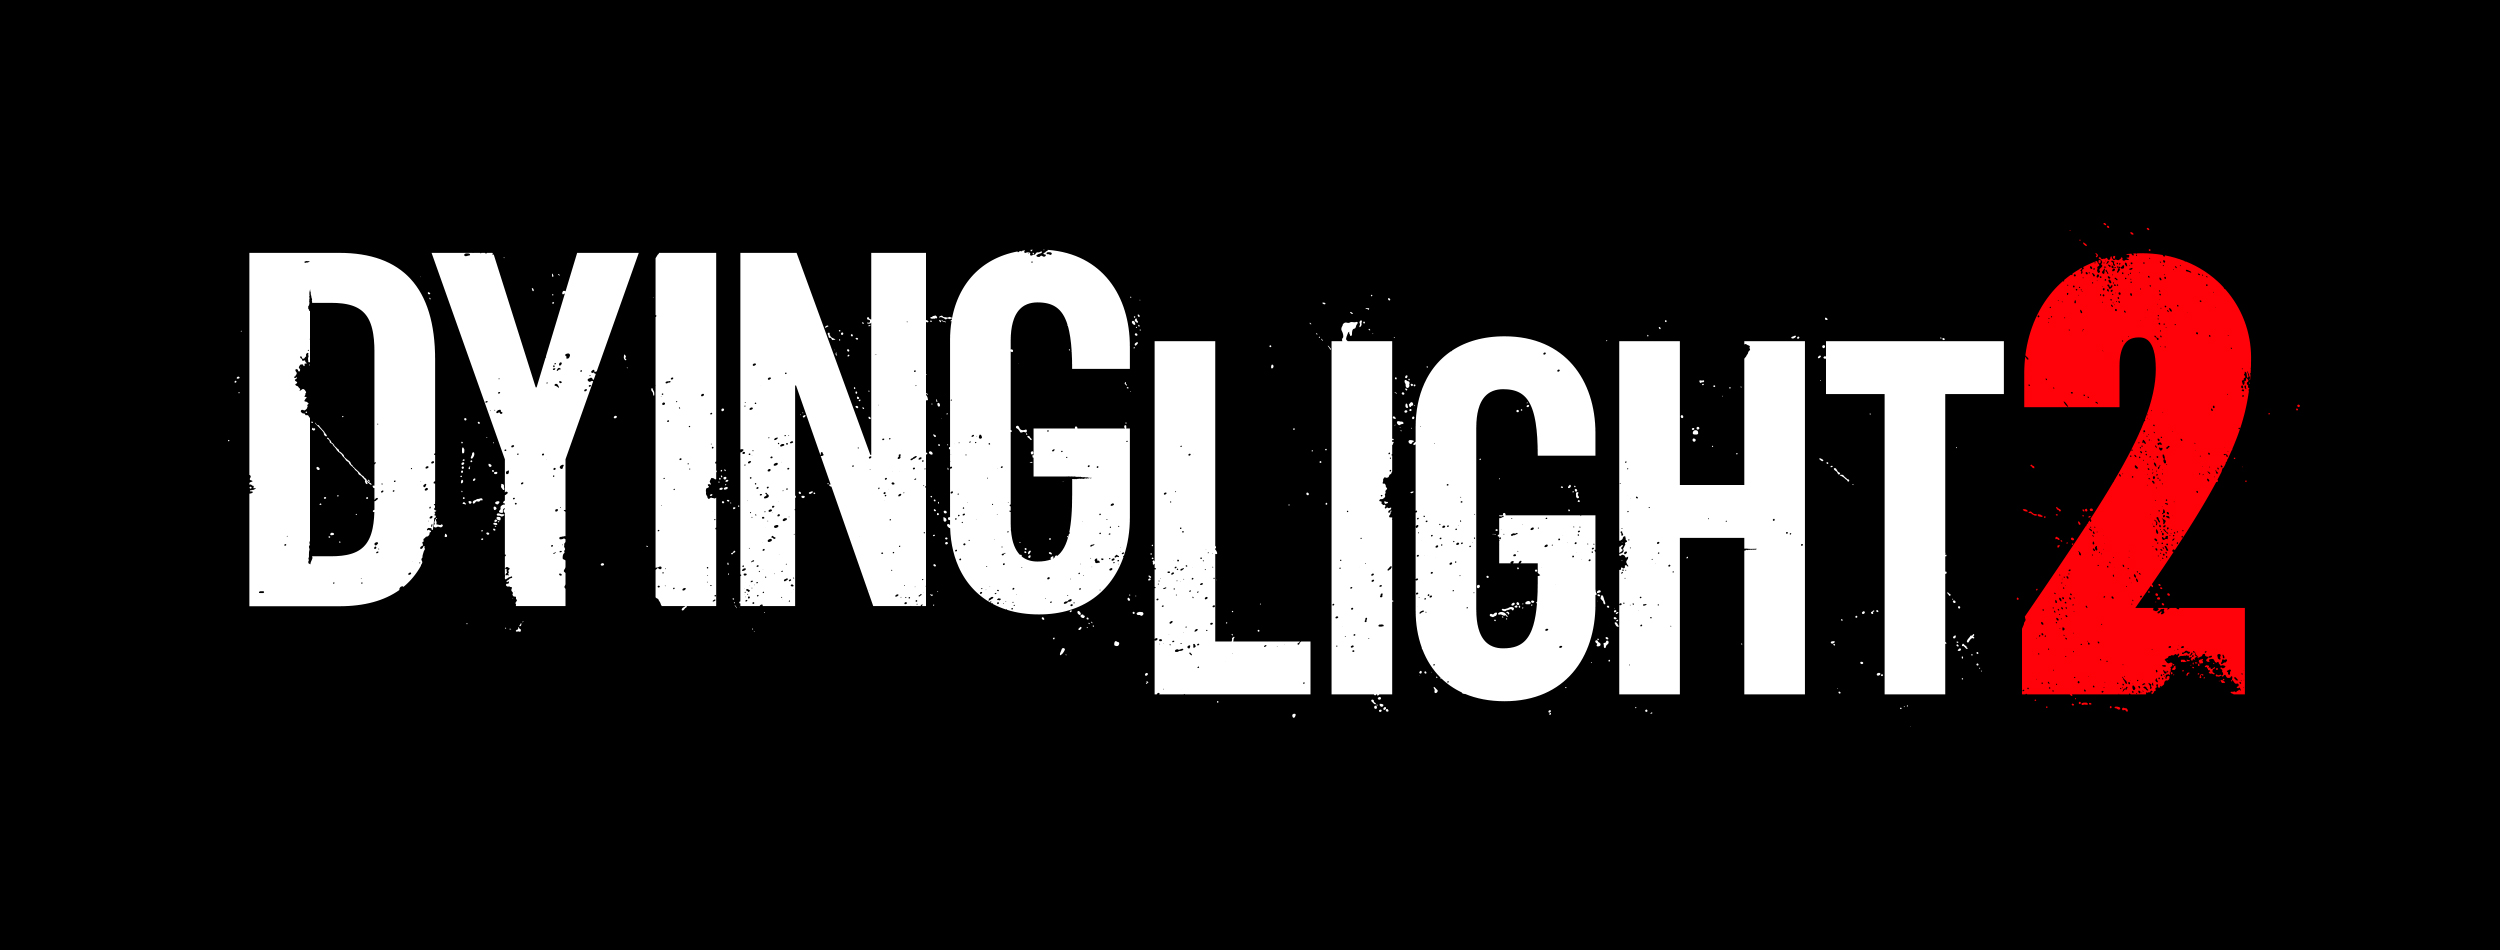 Stay human 1. Dying Light 2 логотип. Dying Light 2 надпись. Значок дайн Лайт 2. Dying Light 2 значок.